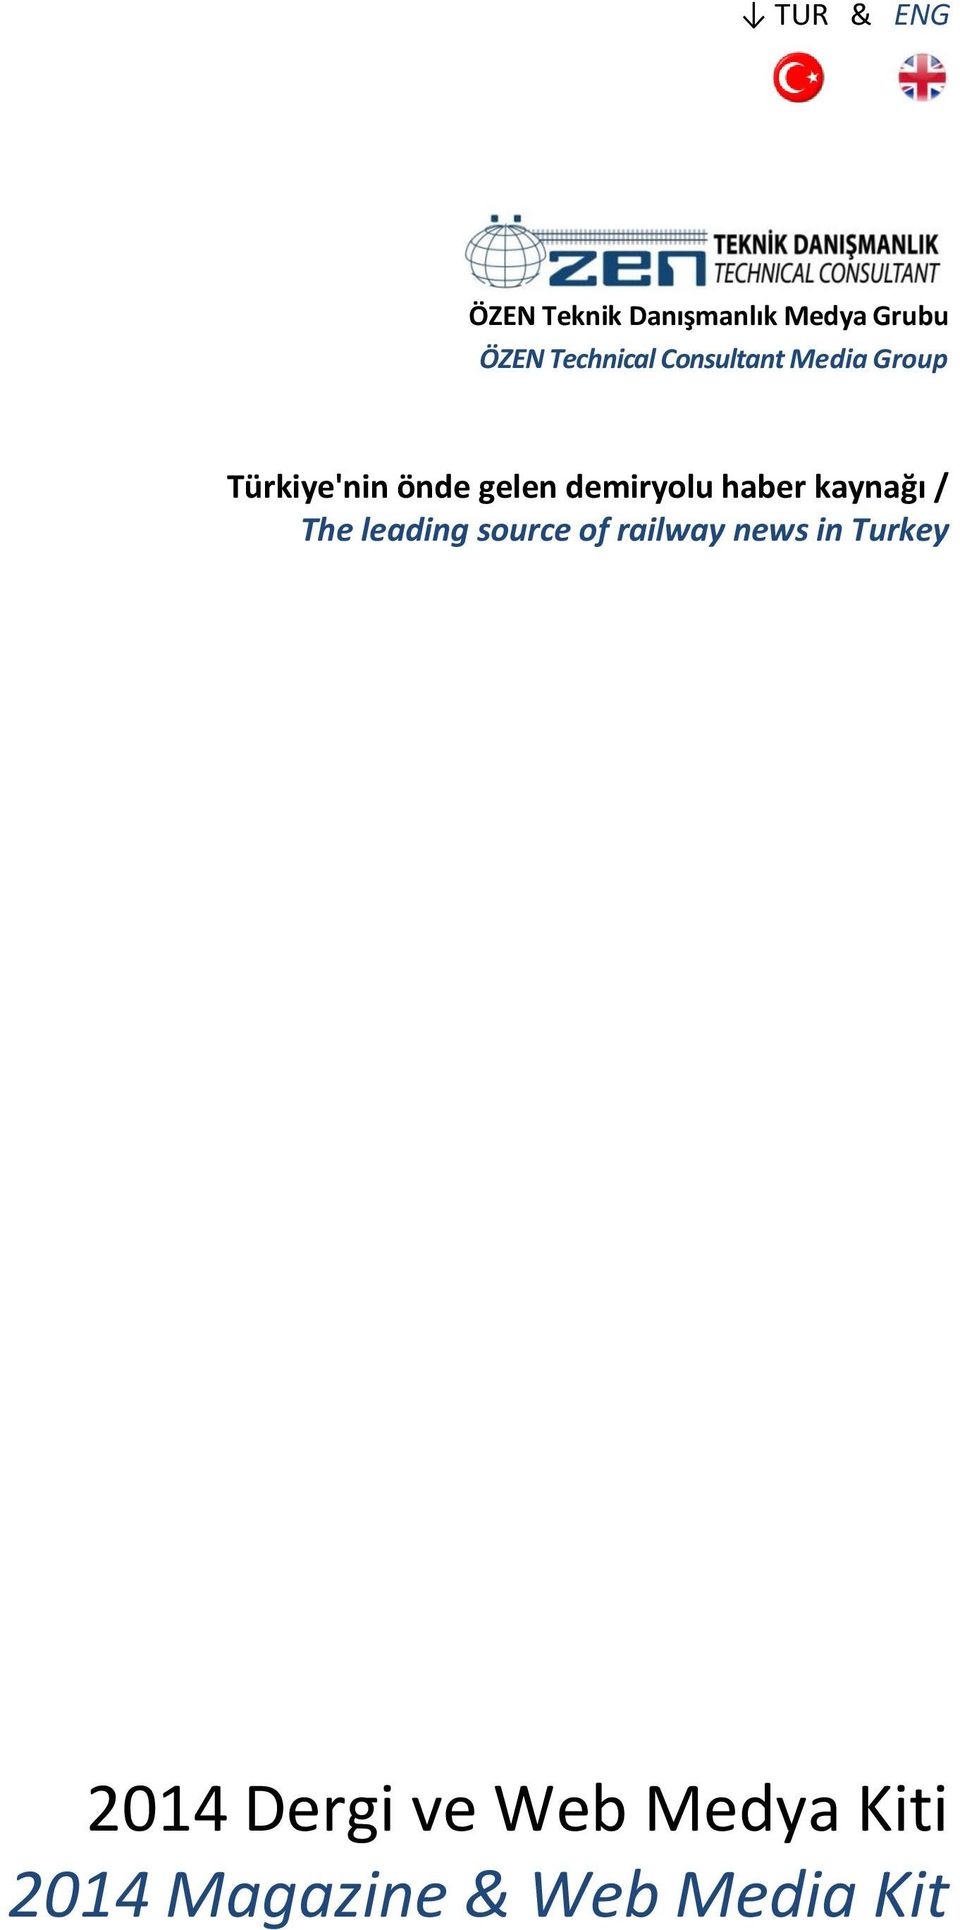 demiryolu haber kaynağı / The leading source of railway